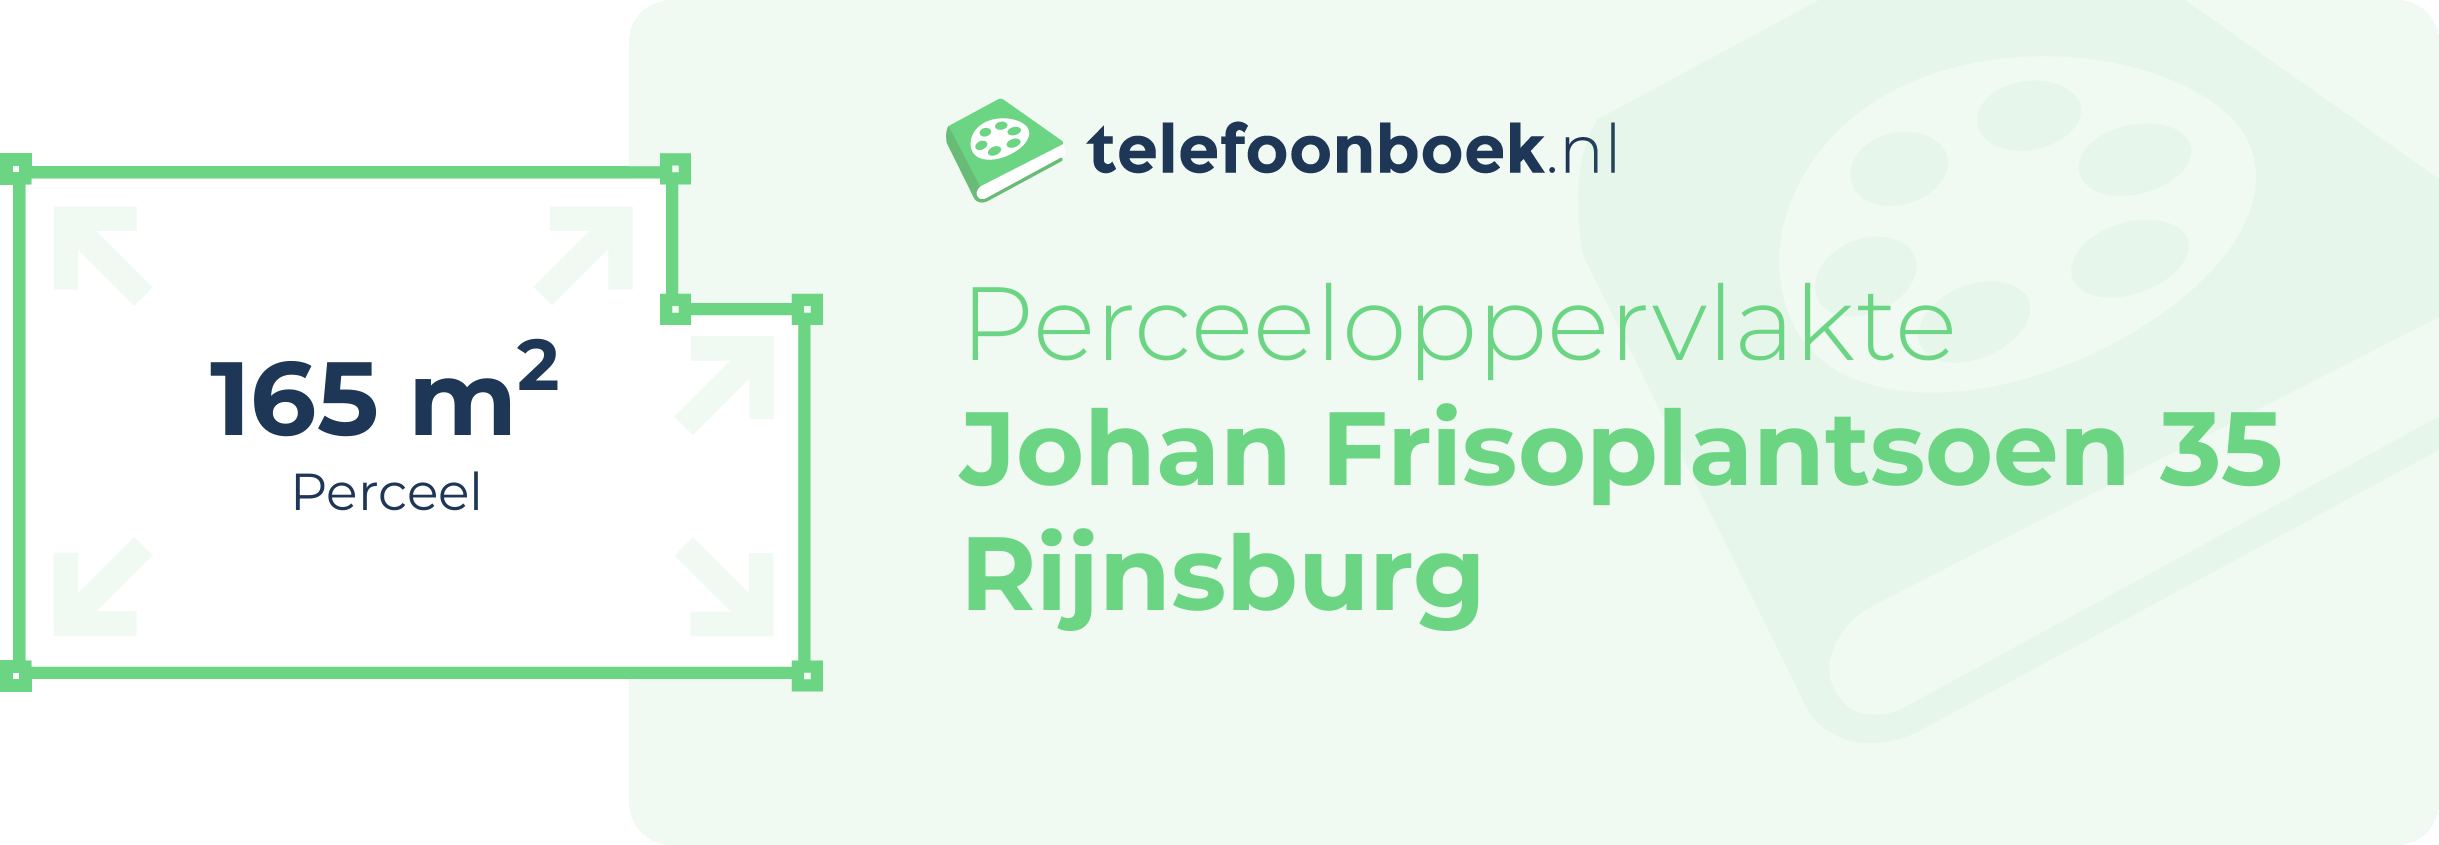 Perceeloppervlakte Johan Frisoplantsoen 35 Rijnsburg